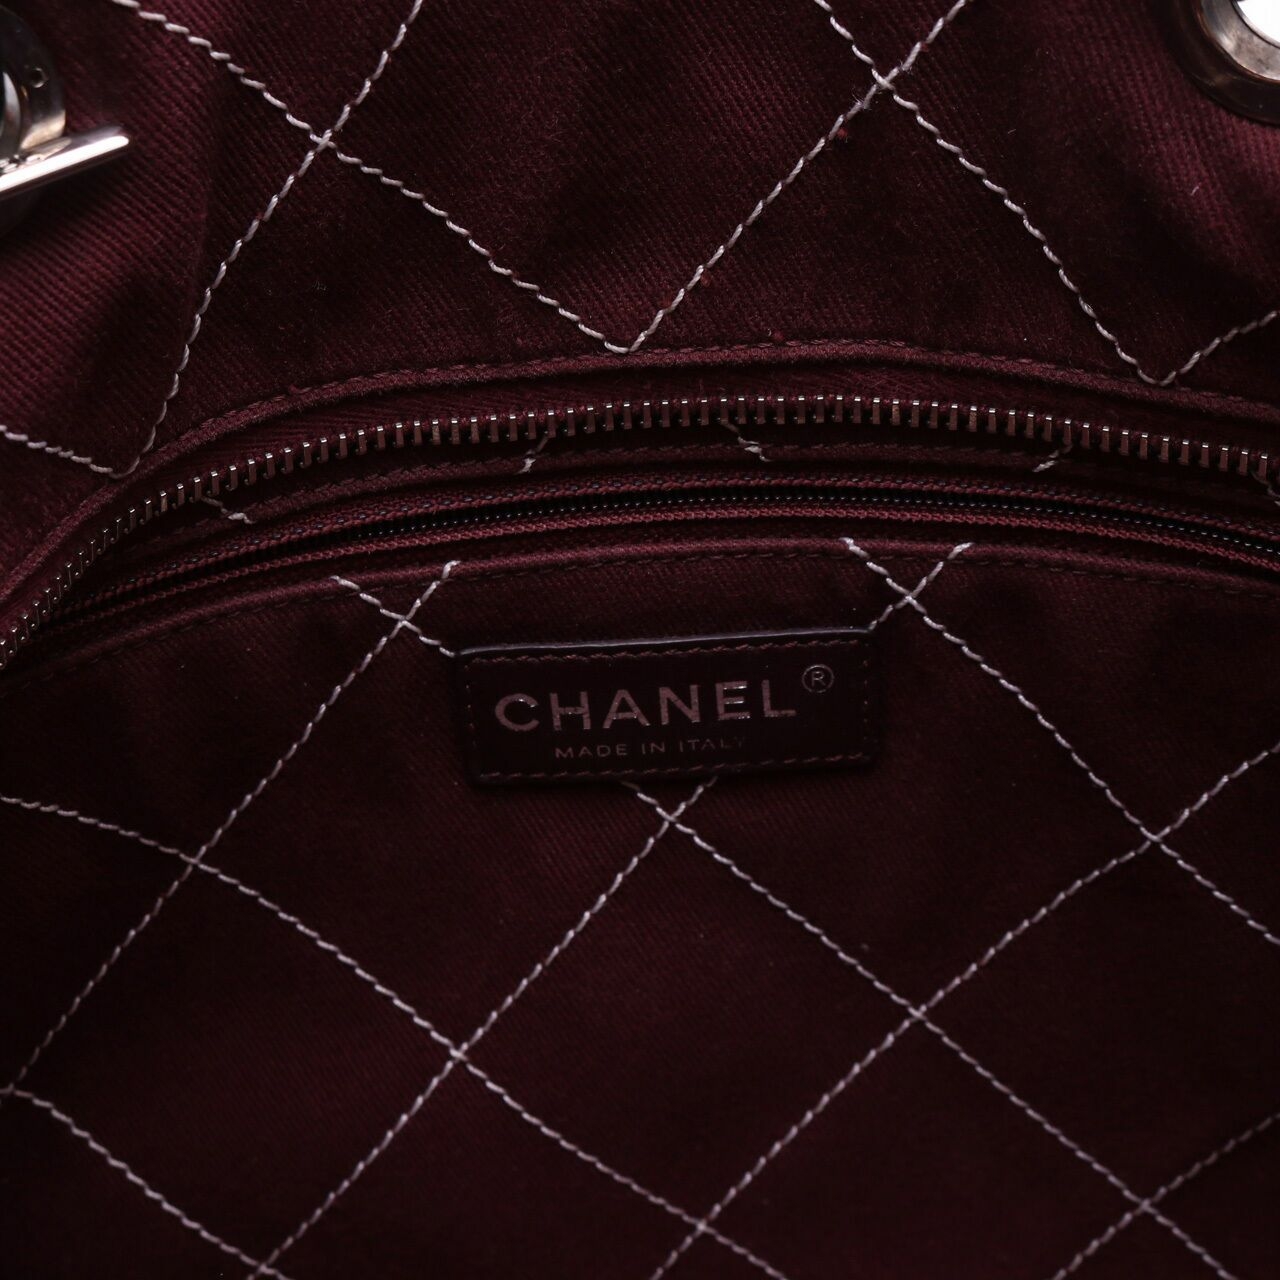  Chanel Beige/Black Caviar Tote Bag